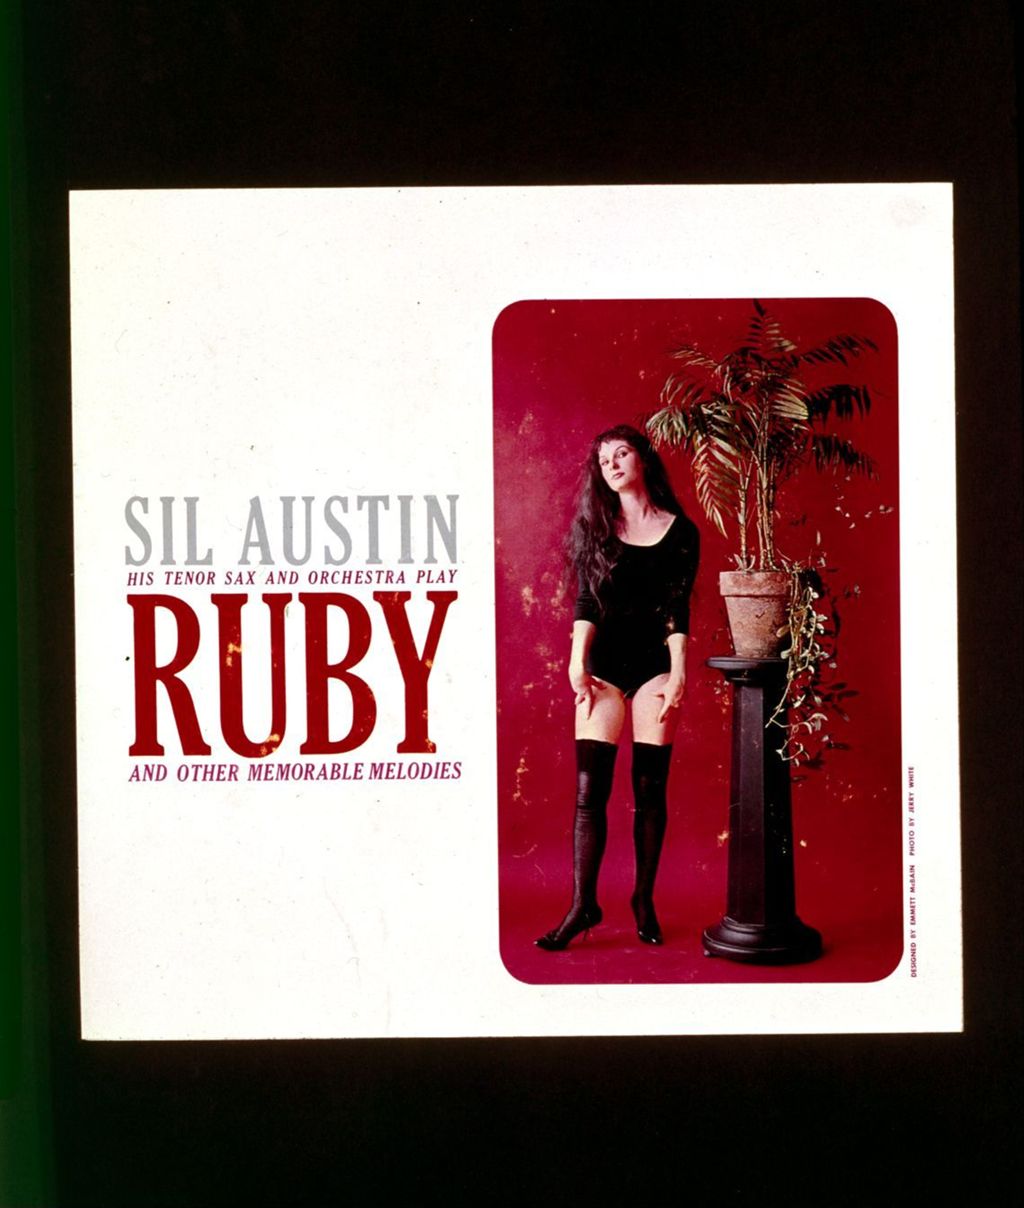 Miniature of Ruby, Sil Austin, album cover